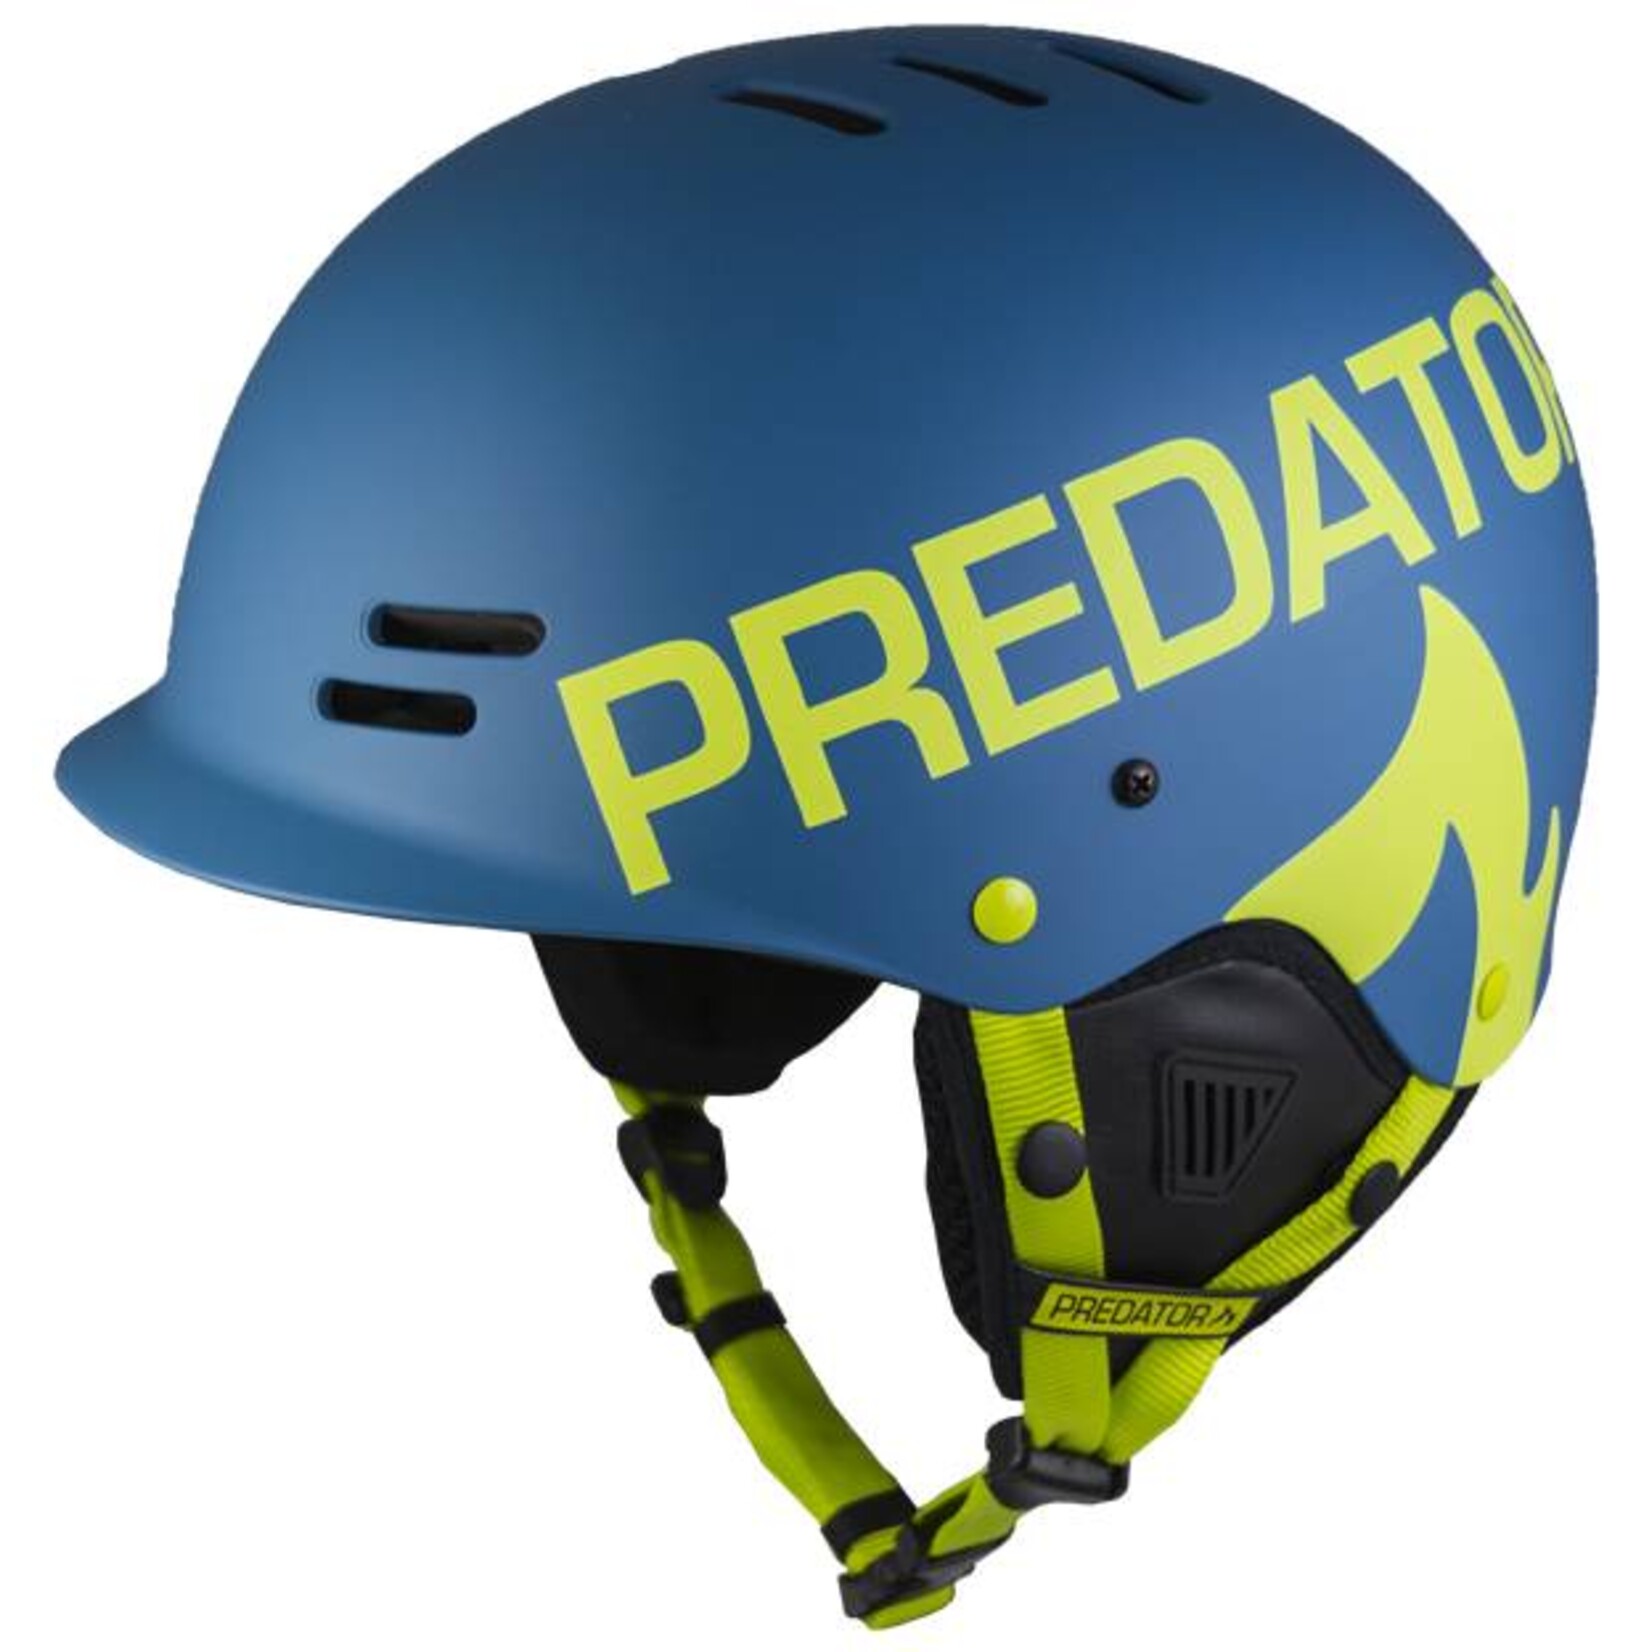 Predator Predator FR7-W